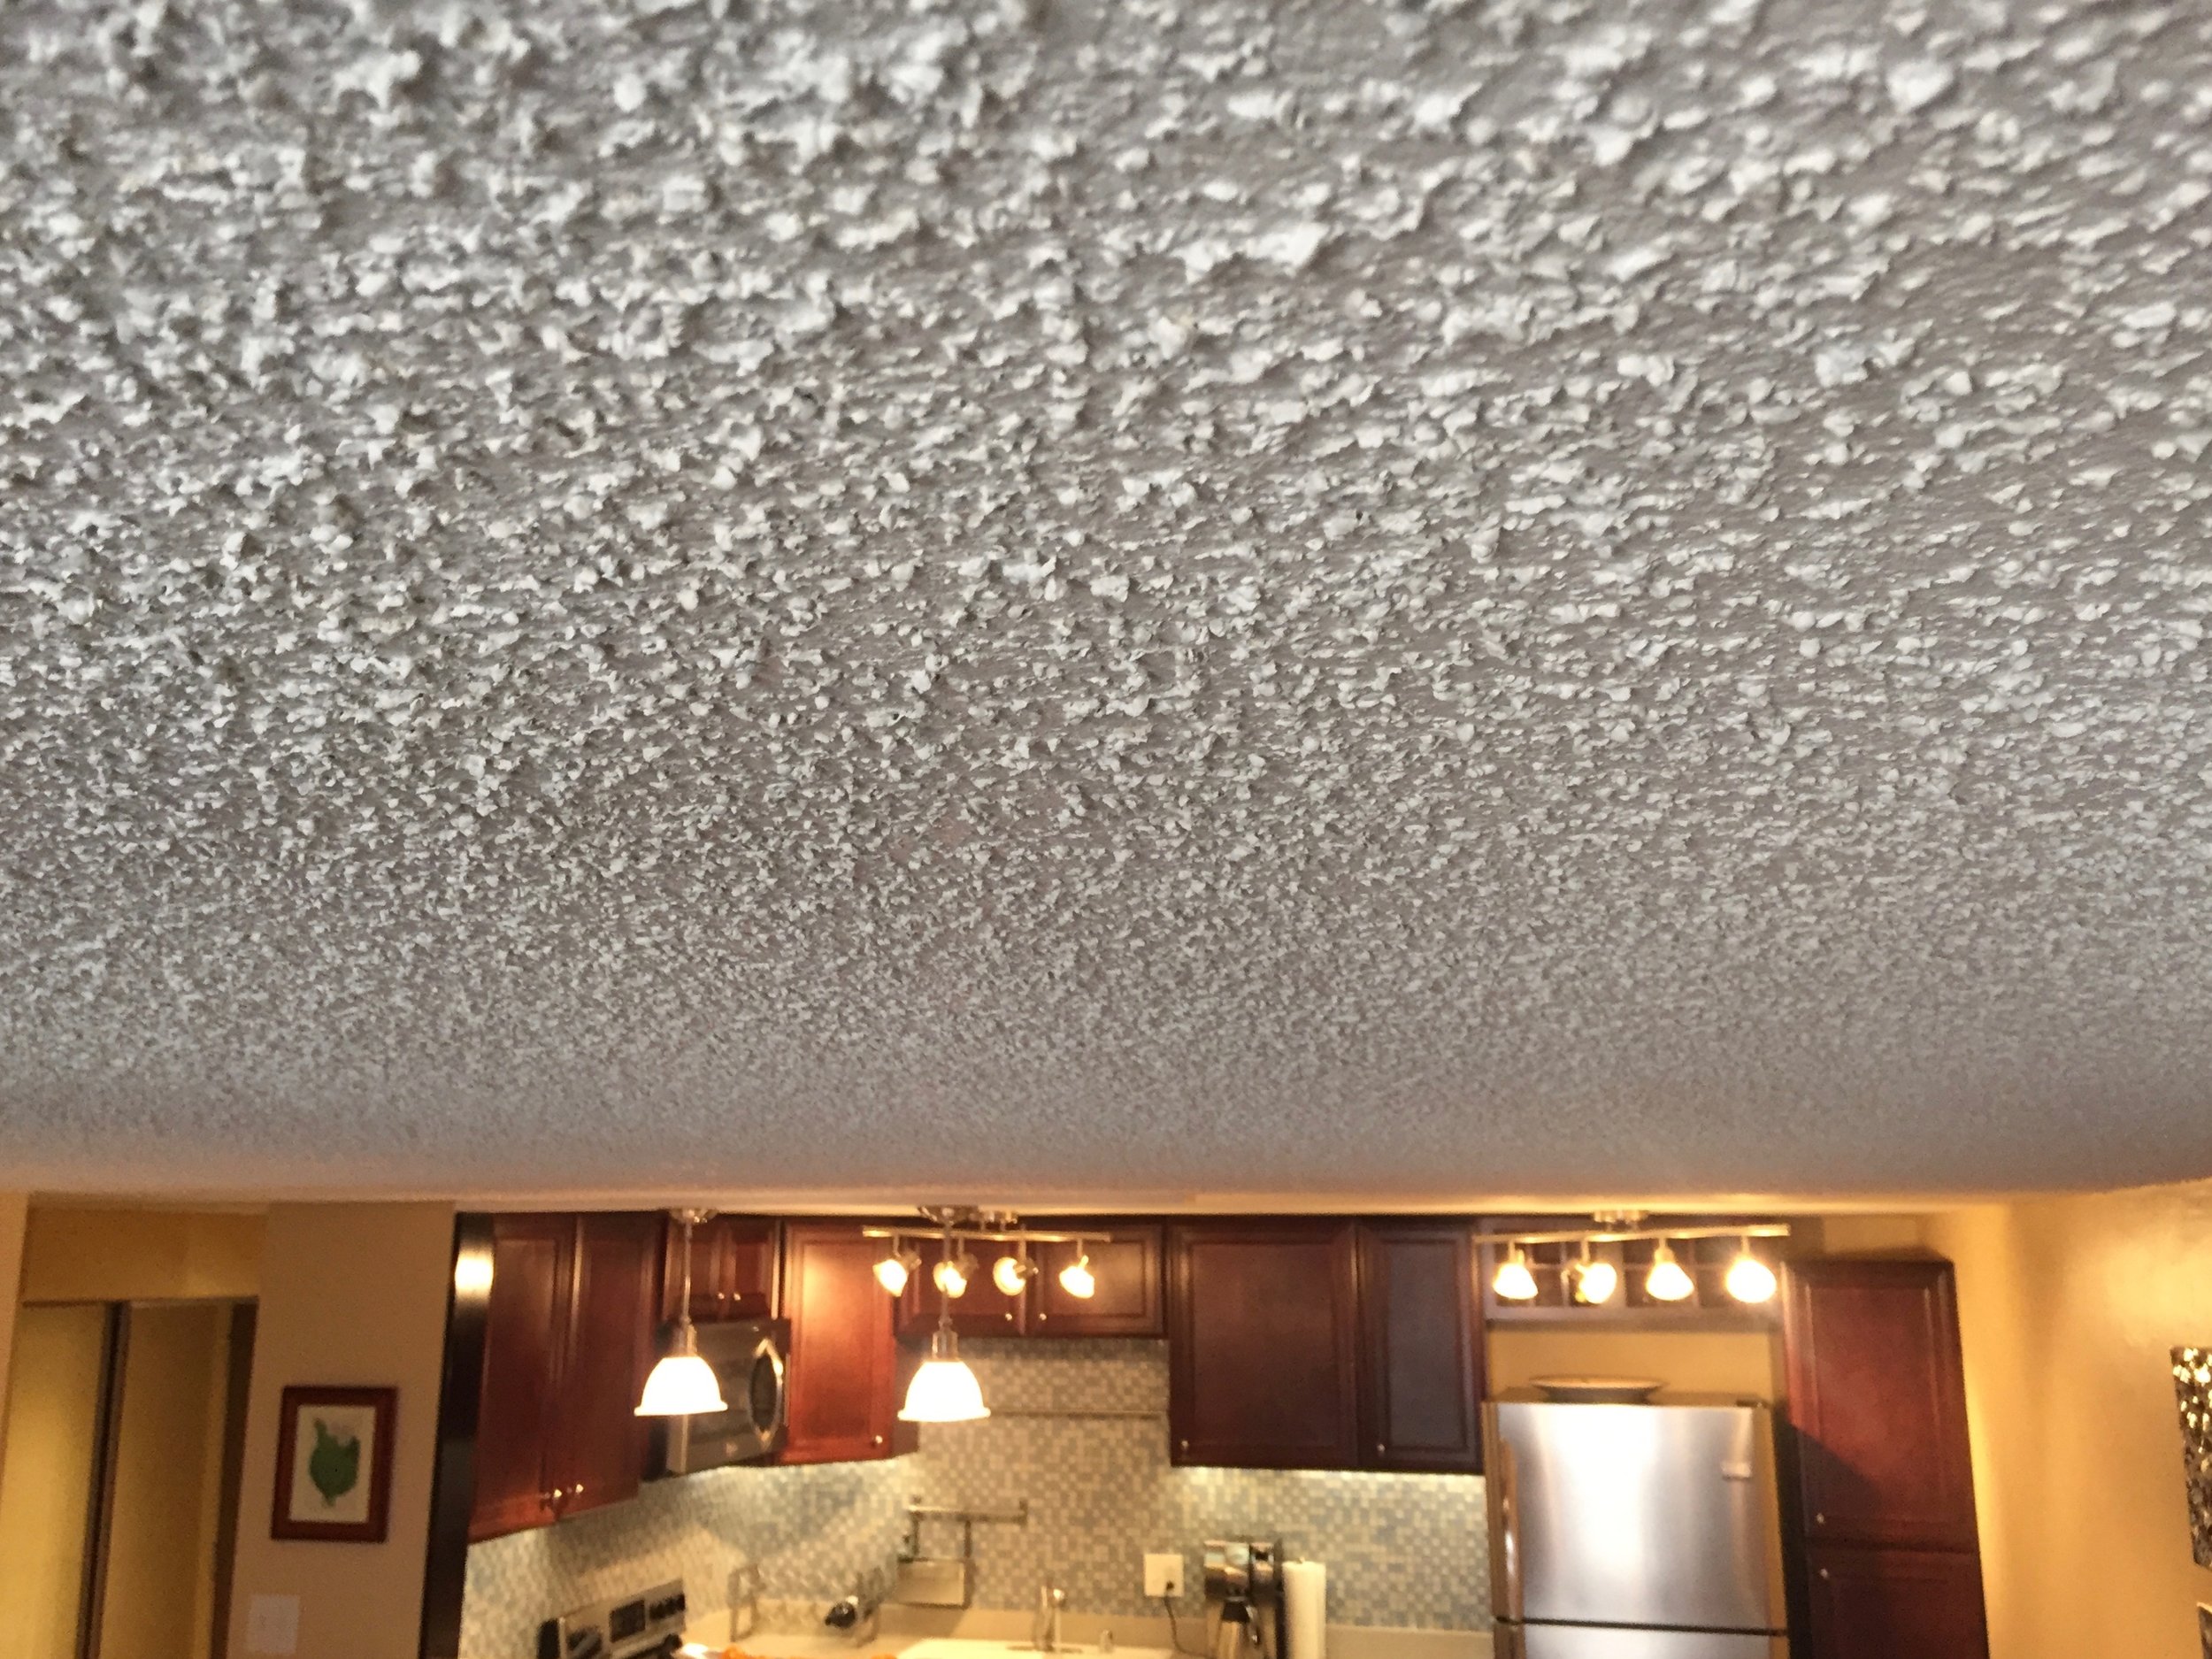 Photos Of Asbestos Popcorn Ceilings